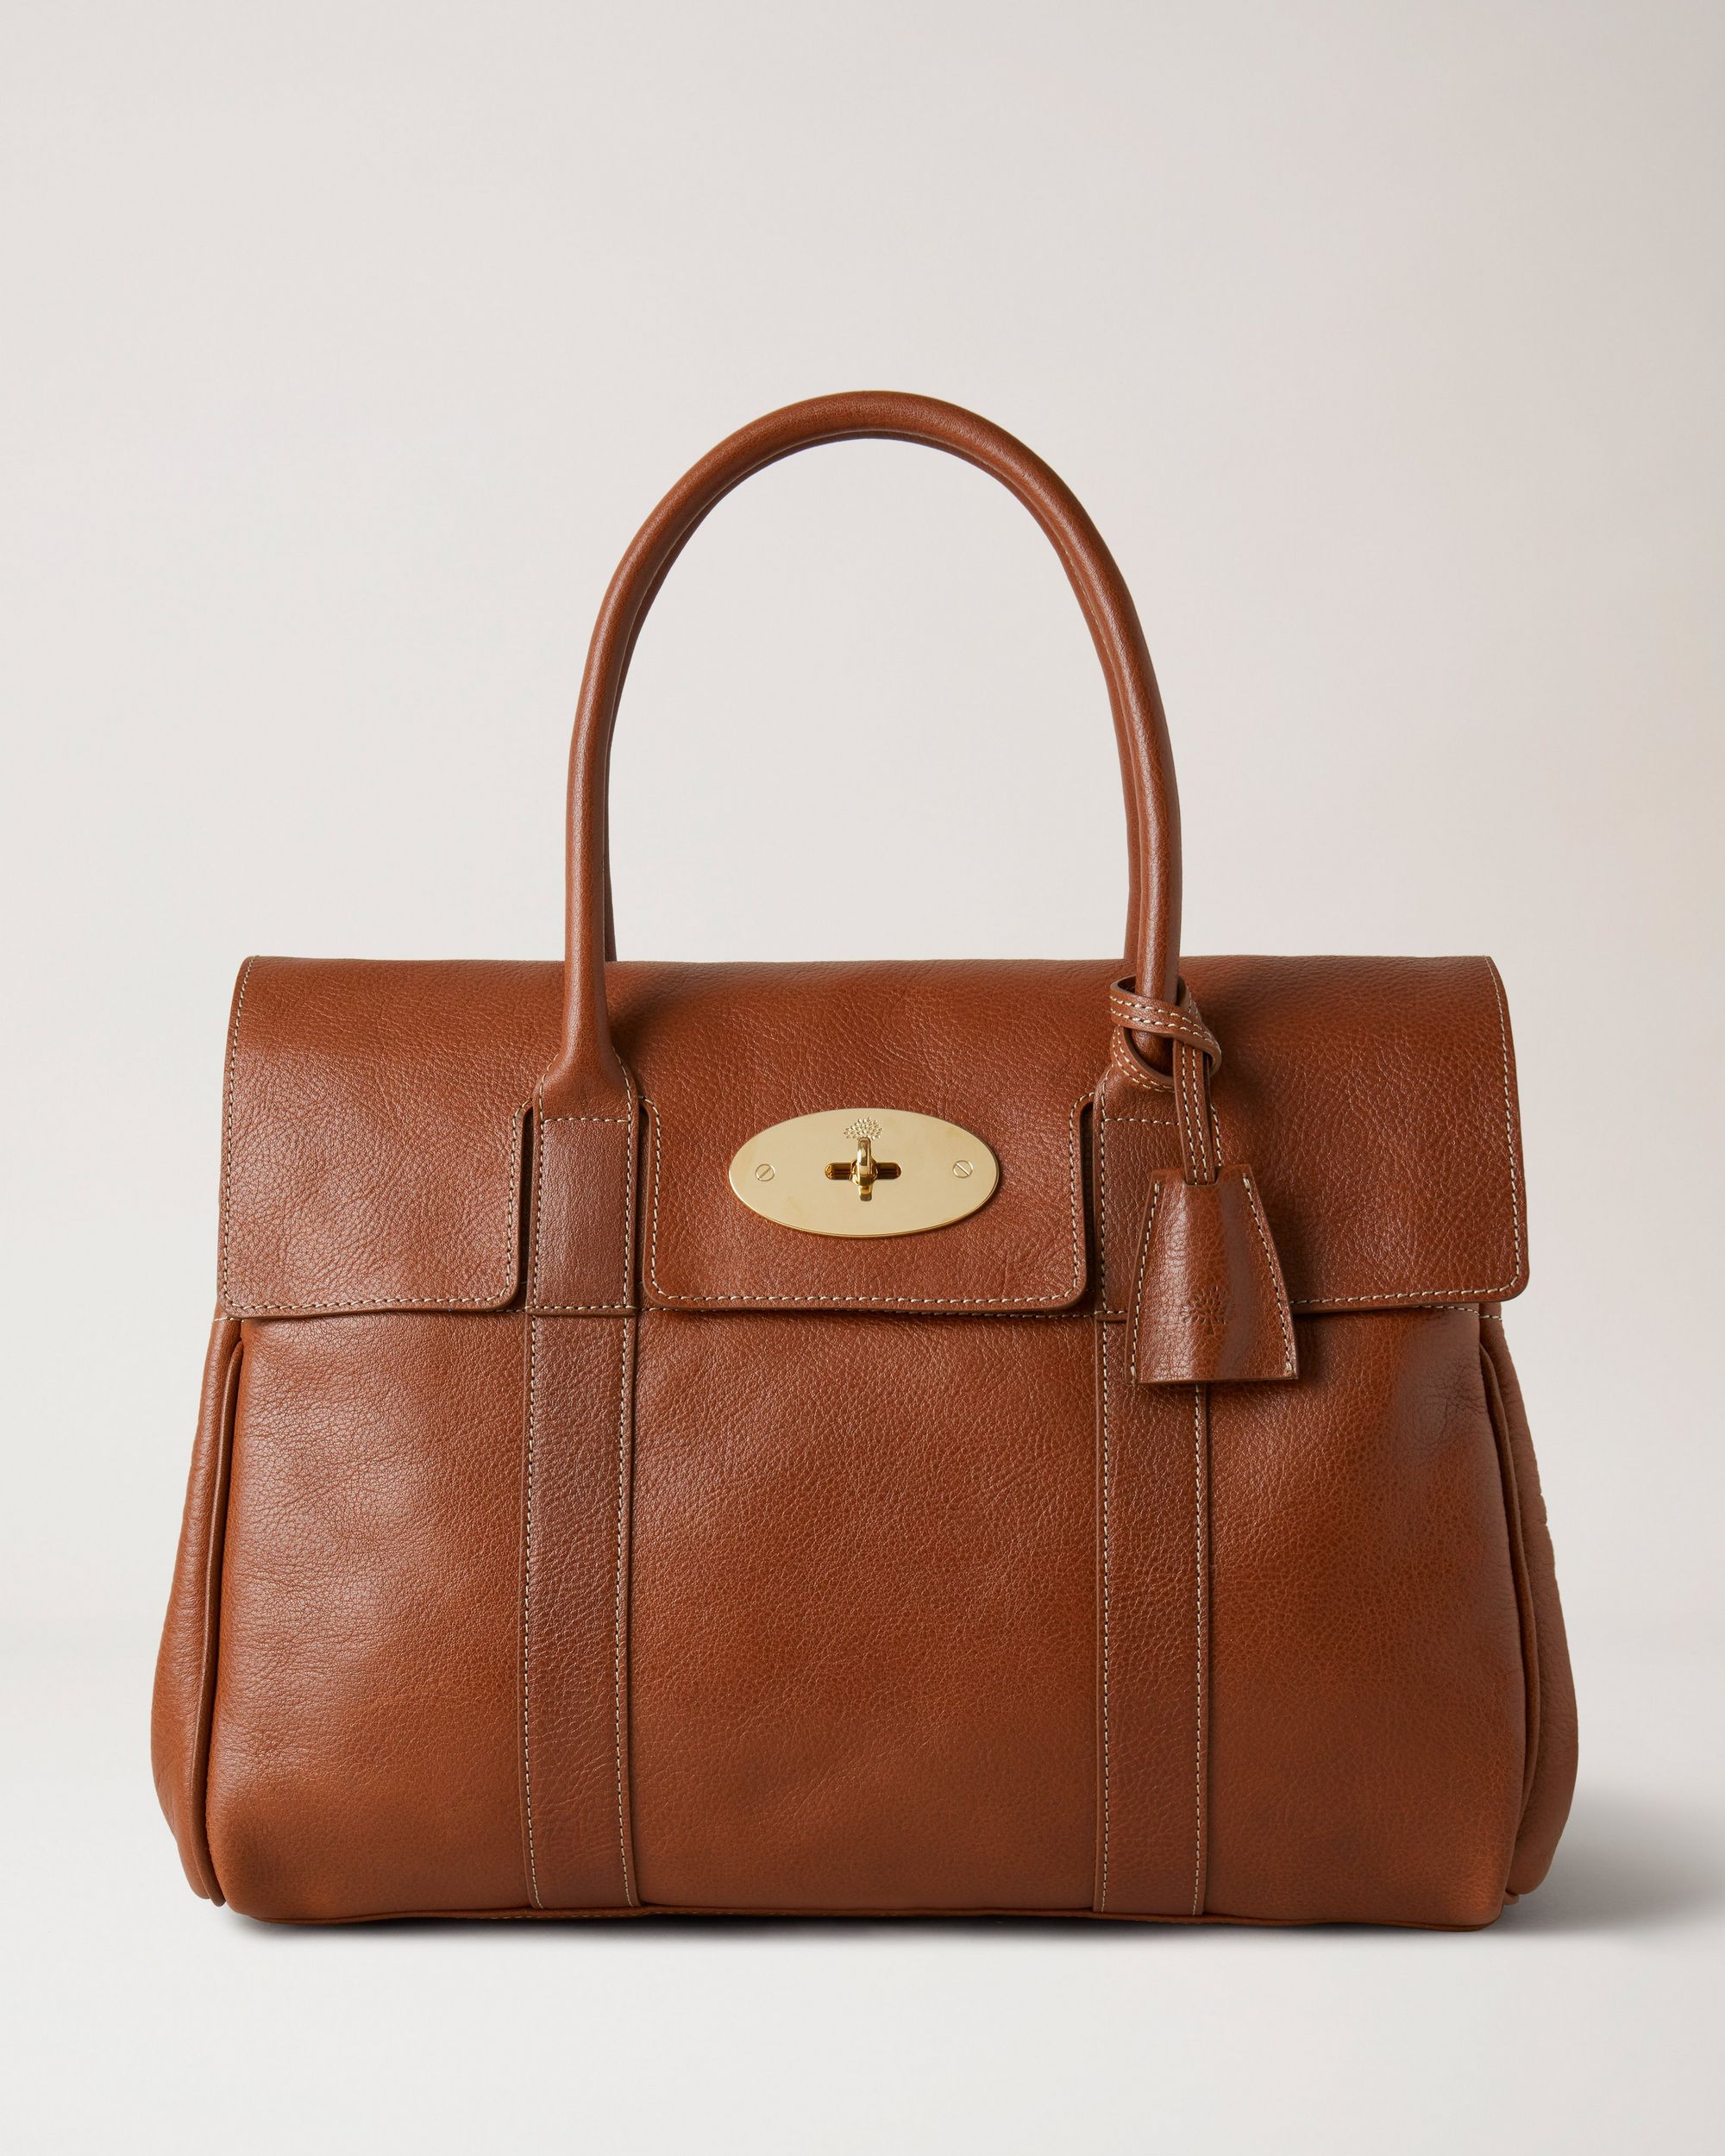 Classic brown luxury handbag